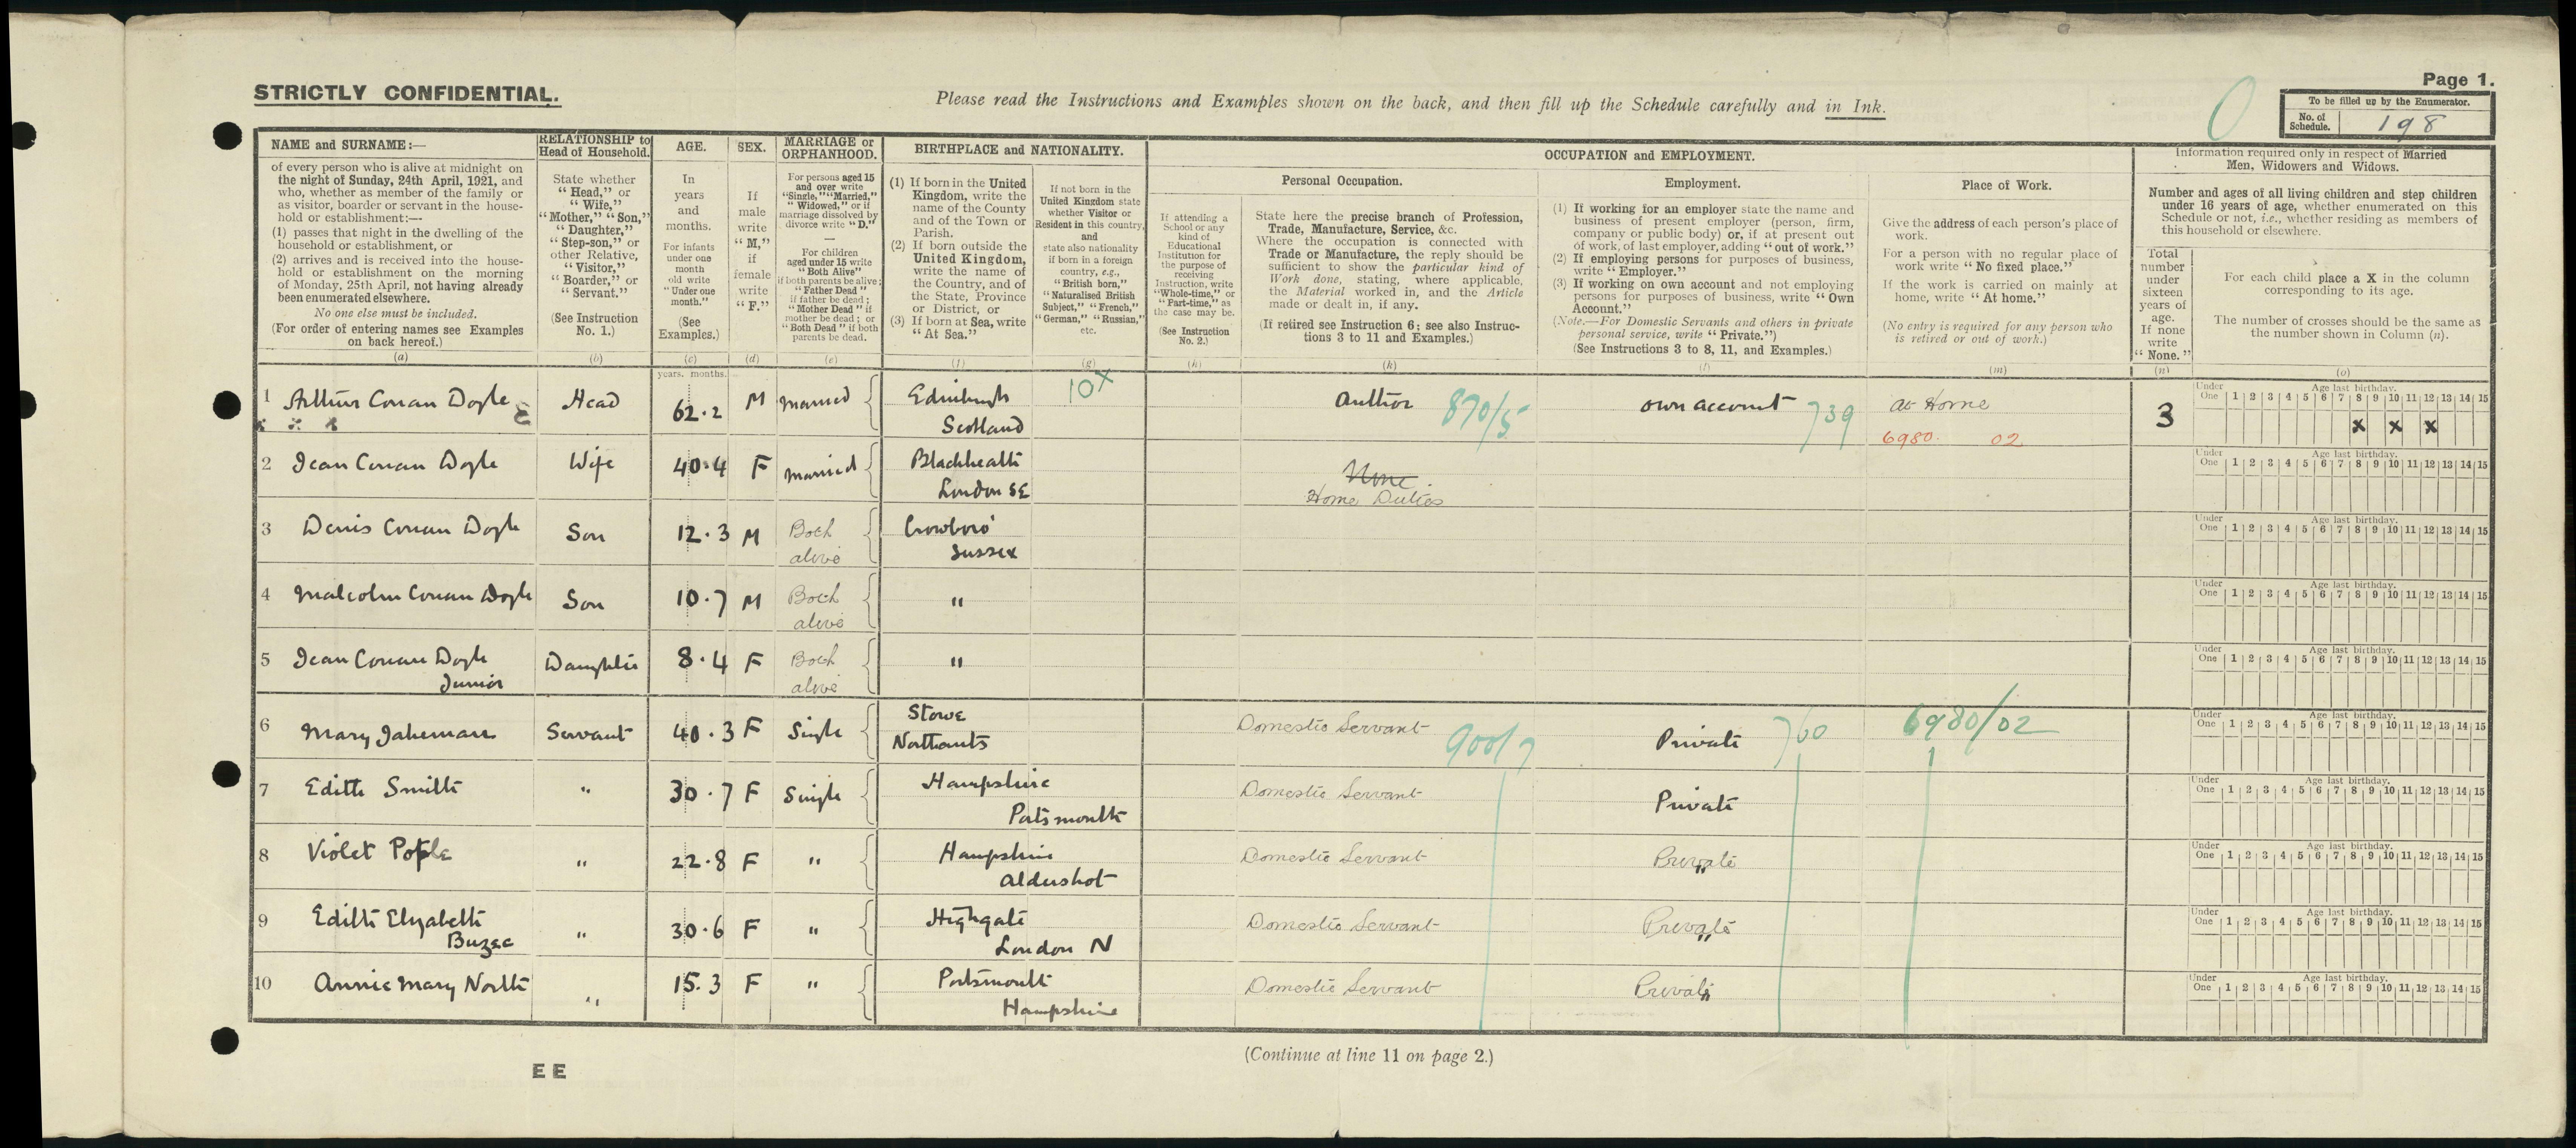 Arthur Conan Doyle's 1921 Census return.